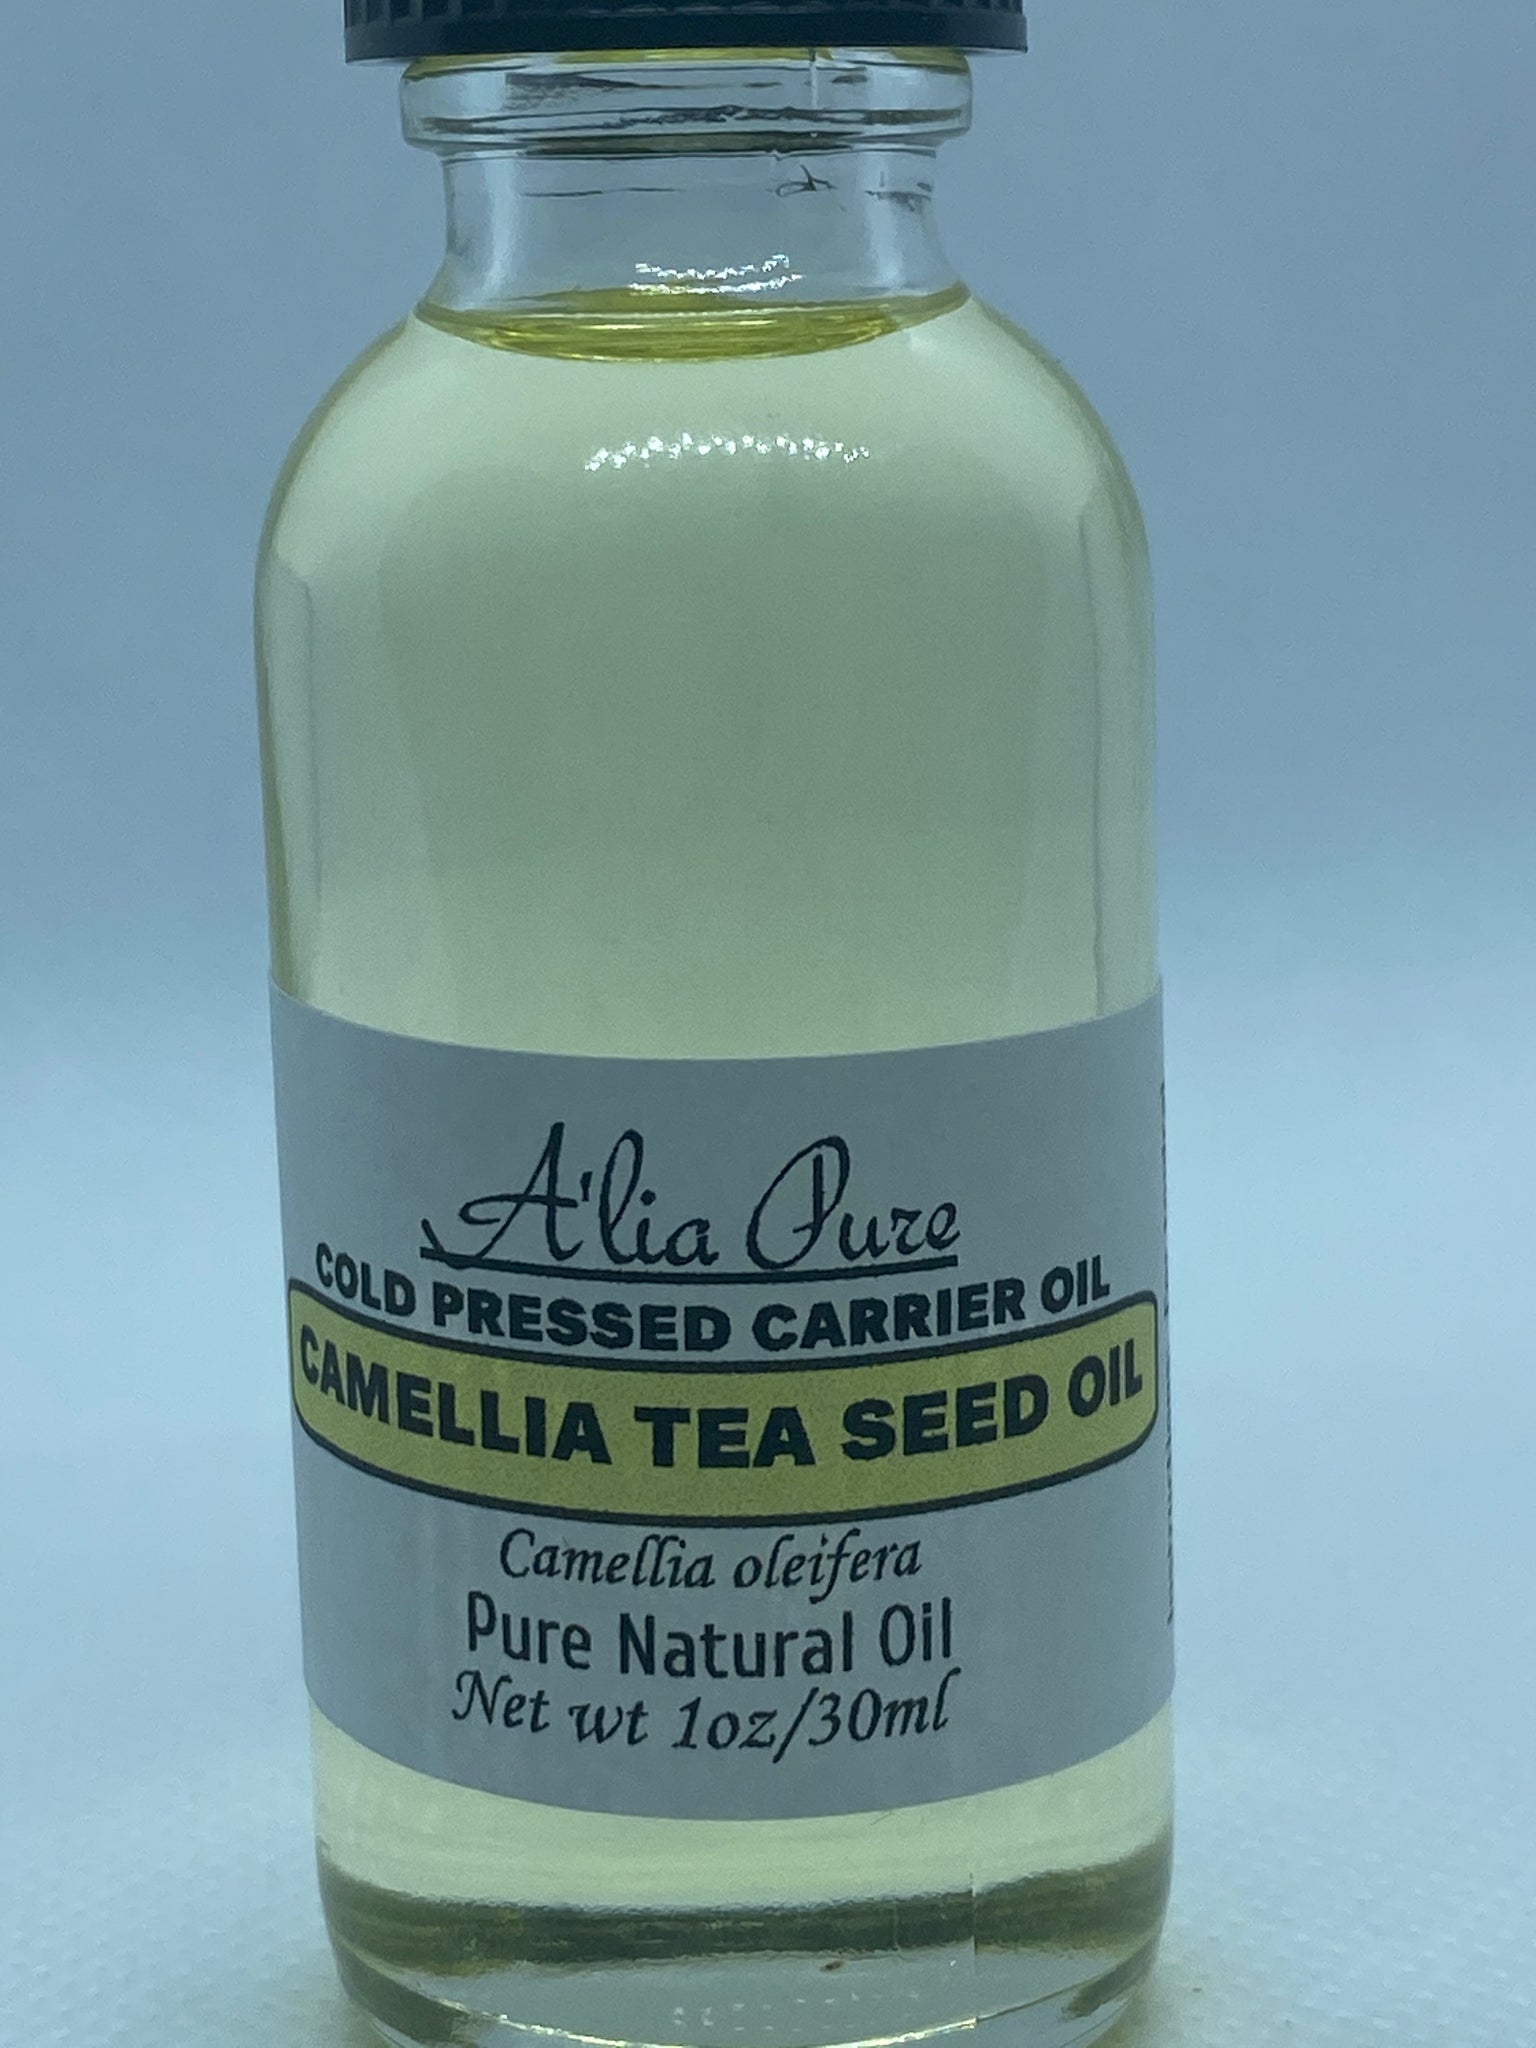 Camellia Tea Seed Oil